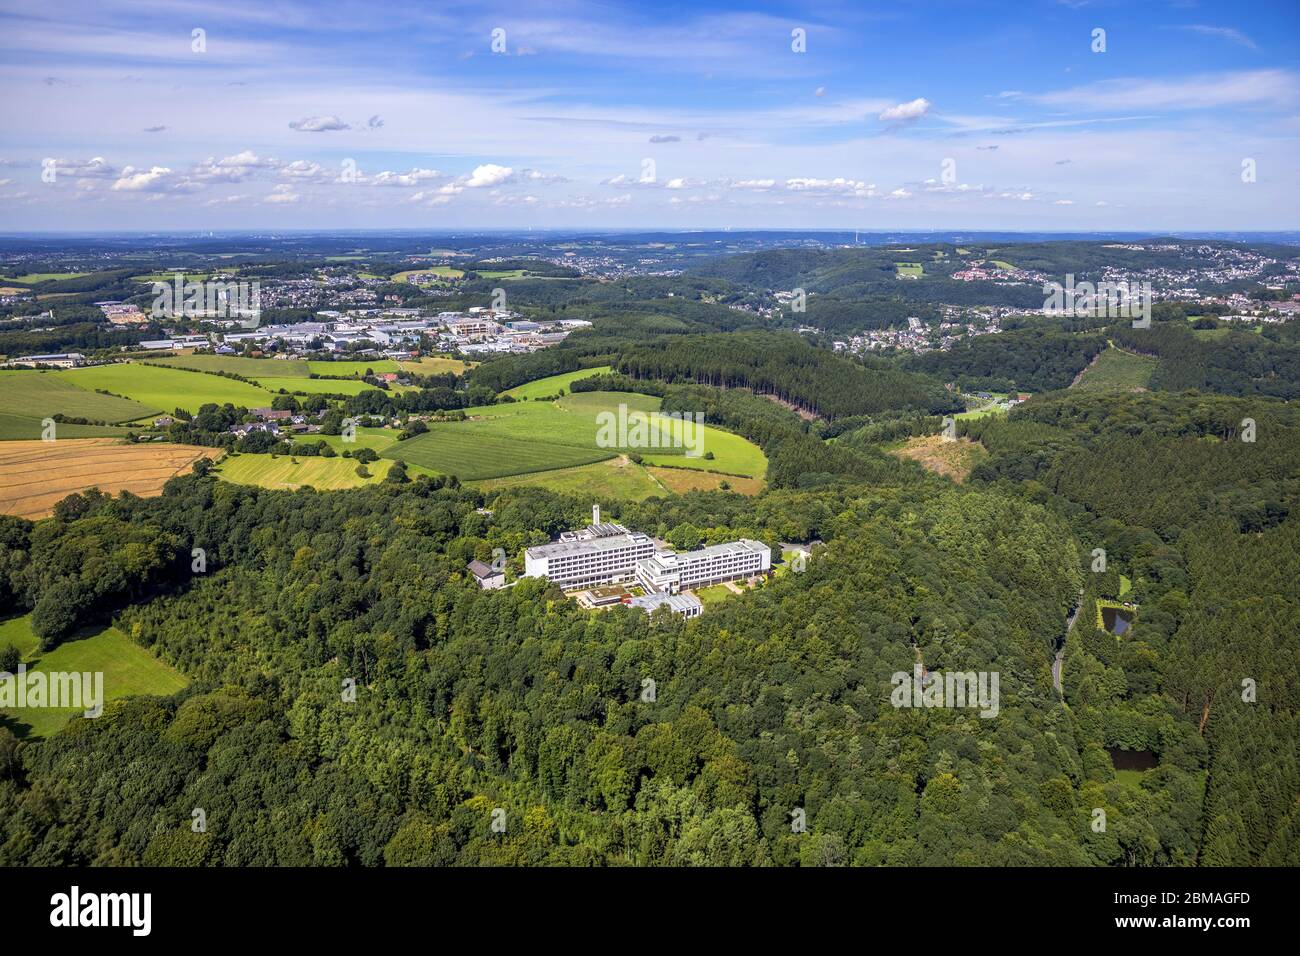 , hospital Klinik Koenigsfeld at Holthauser Talstrasse in Ennepetal, 31.07.2017, aerial view, Germany, North Rhine-Westphalia, Ruhr Area, Ennepetal Stock Photo